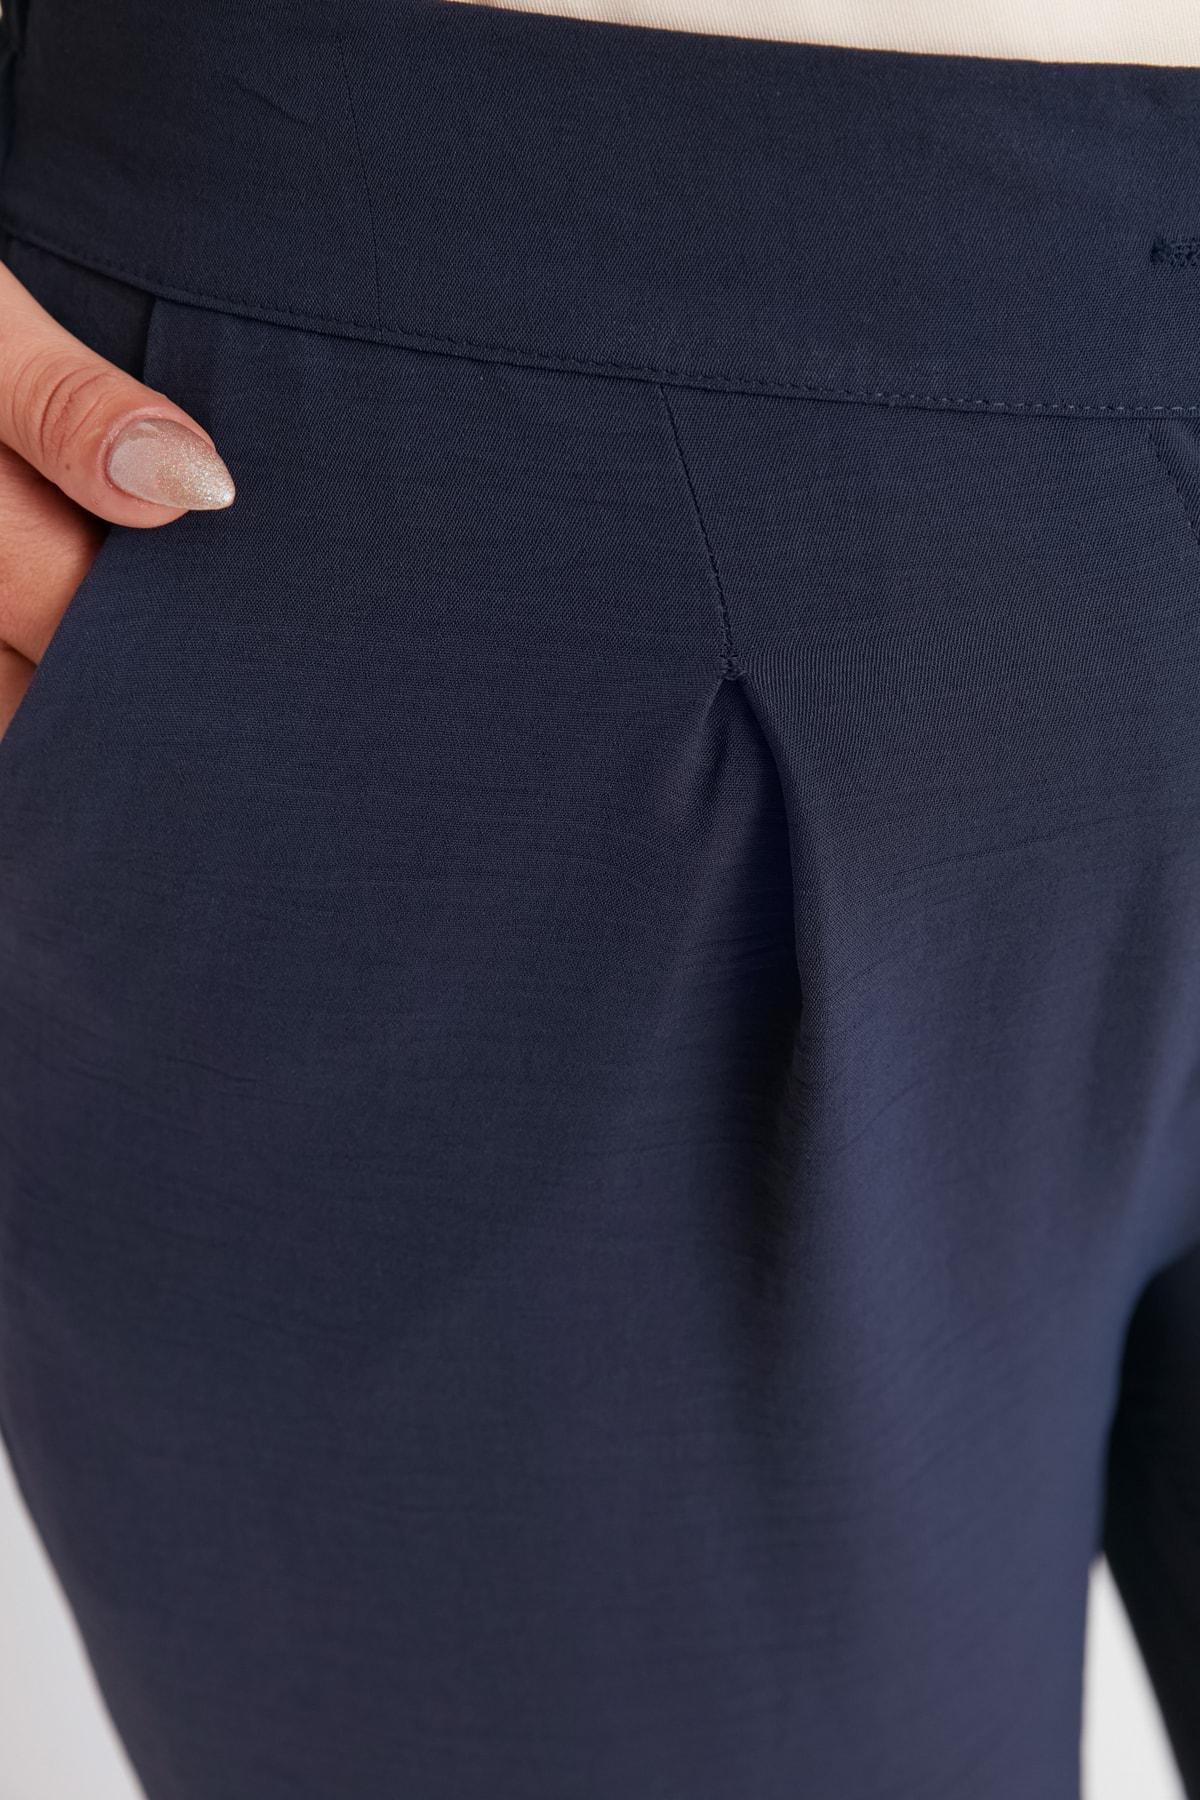 Trendyol - Blue Loose Plus Size Pants